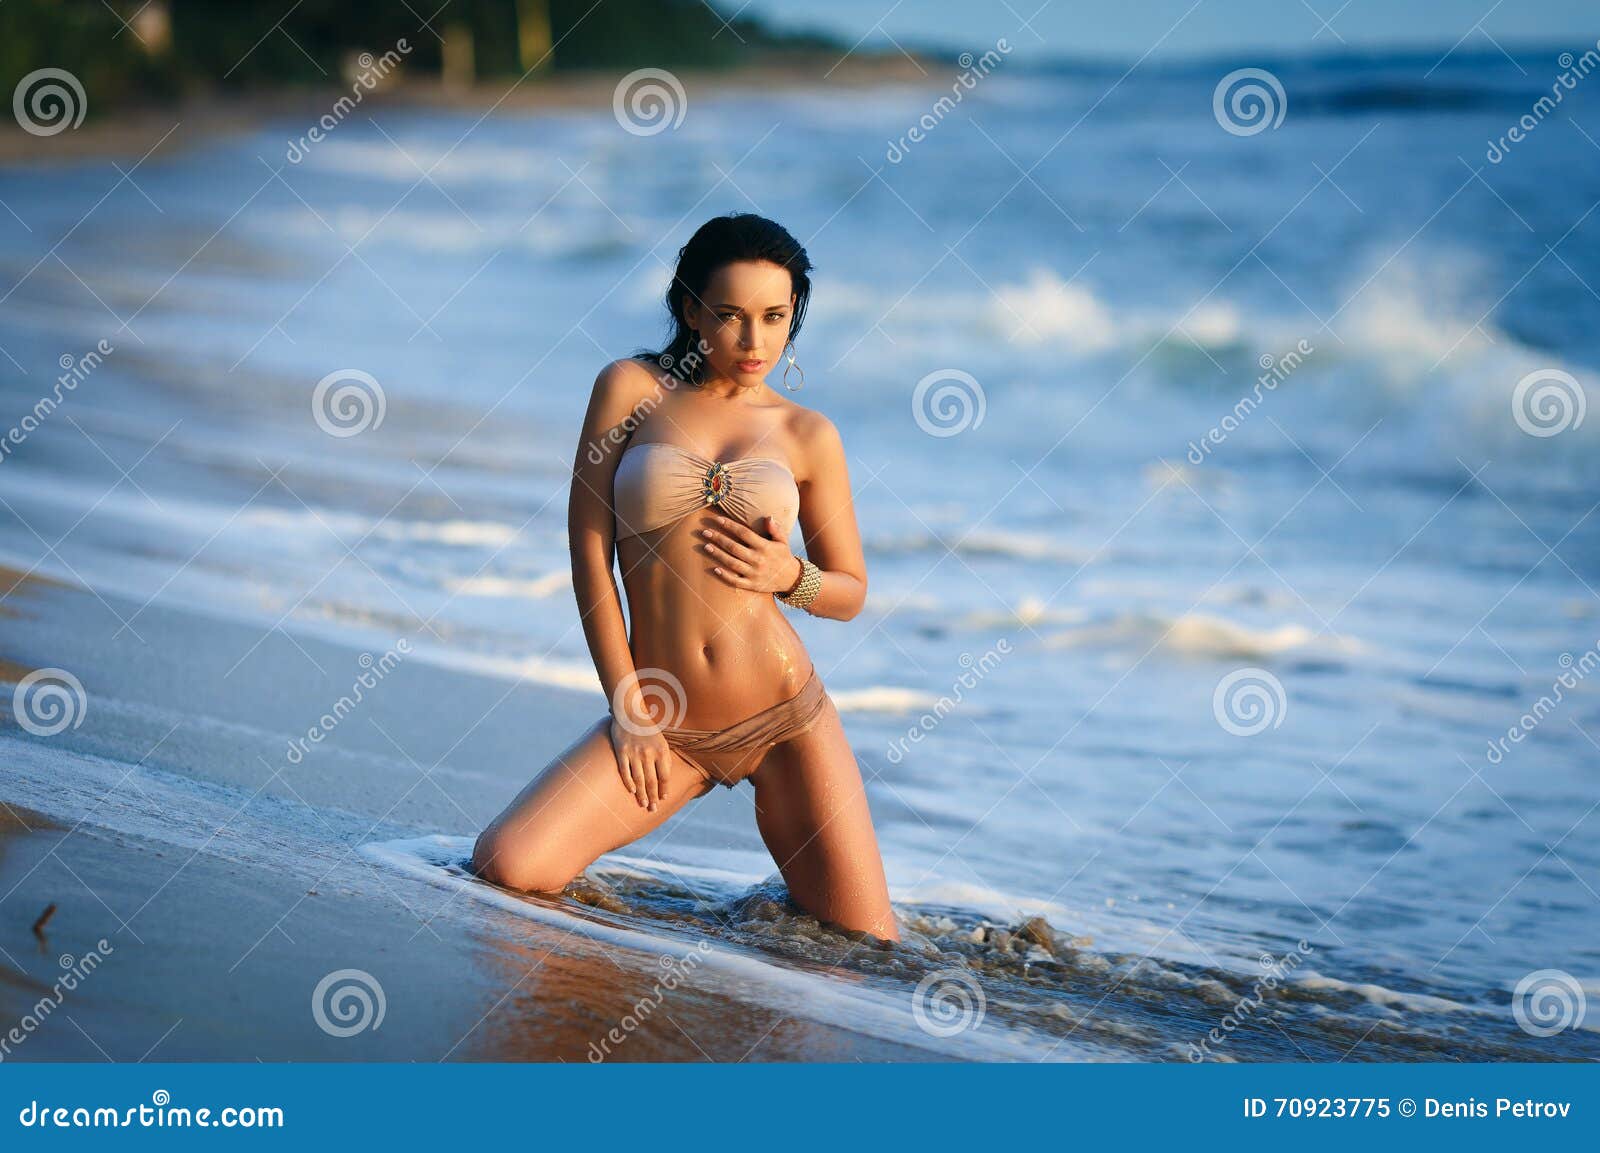 amal tharwat add beautiful nude beach babes photo